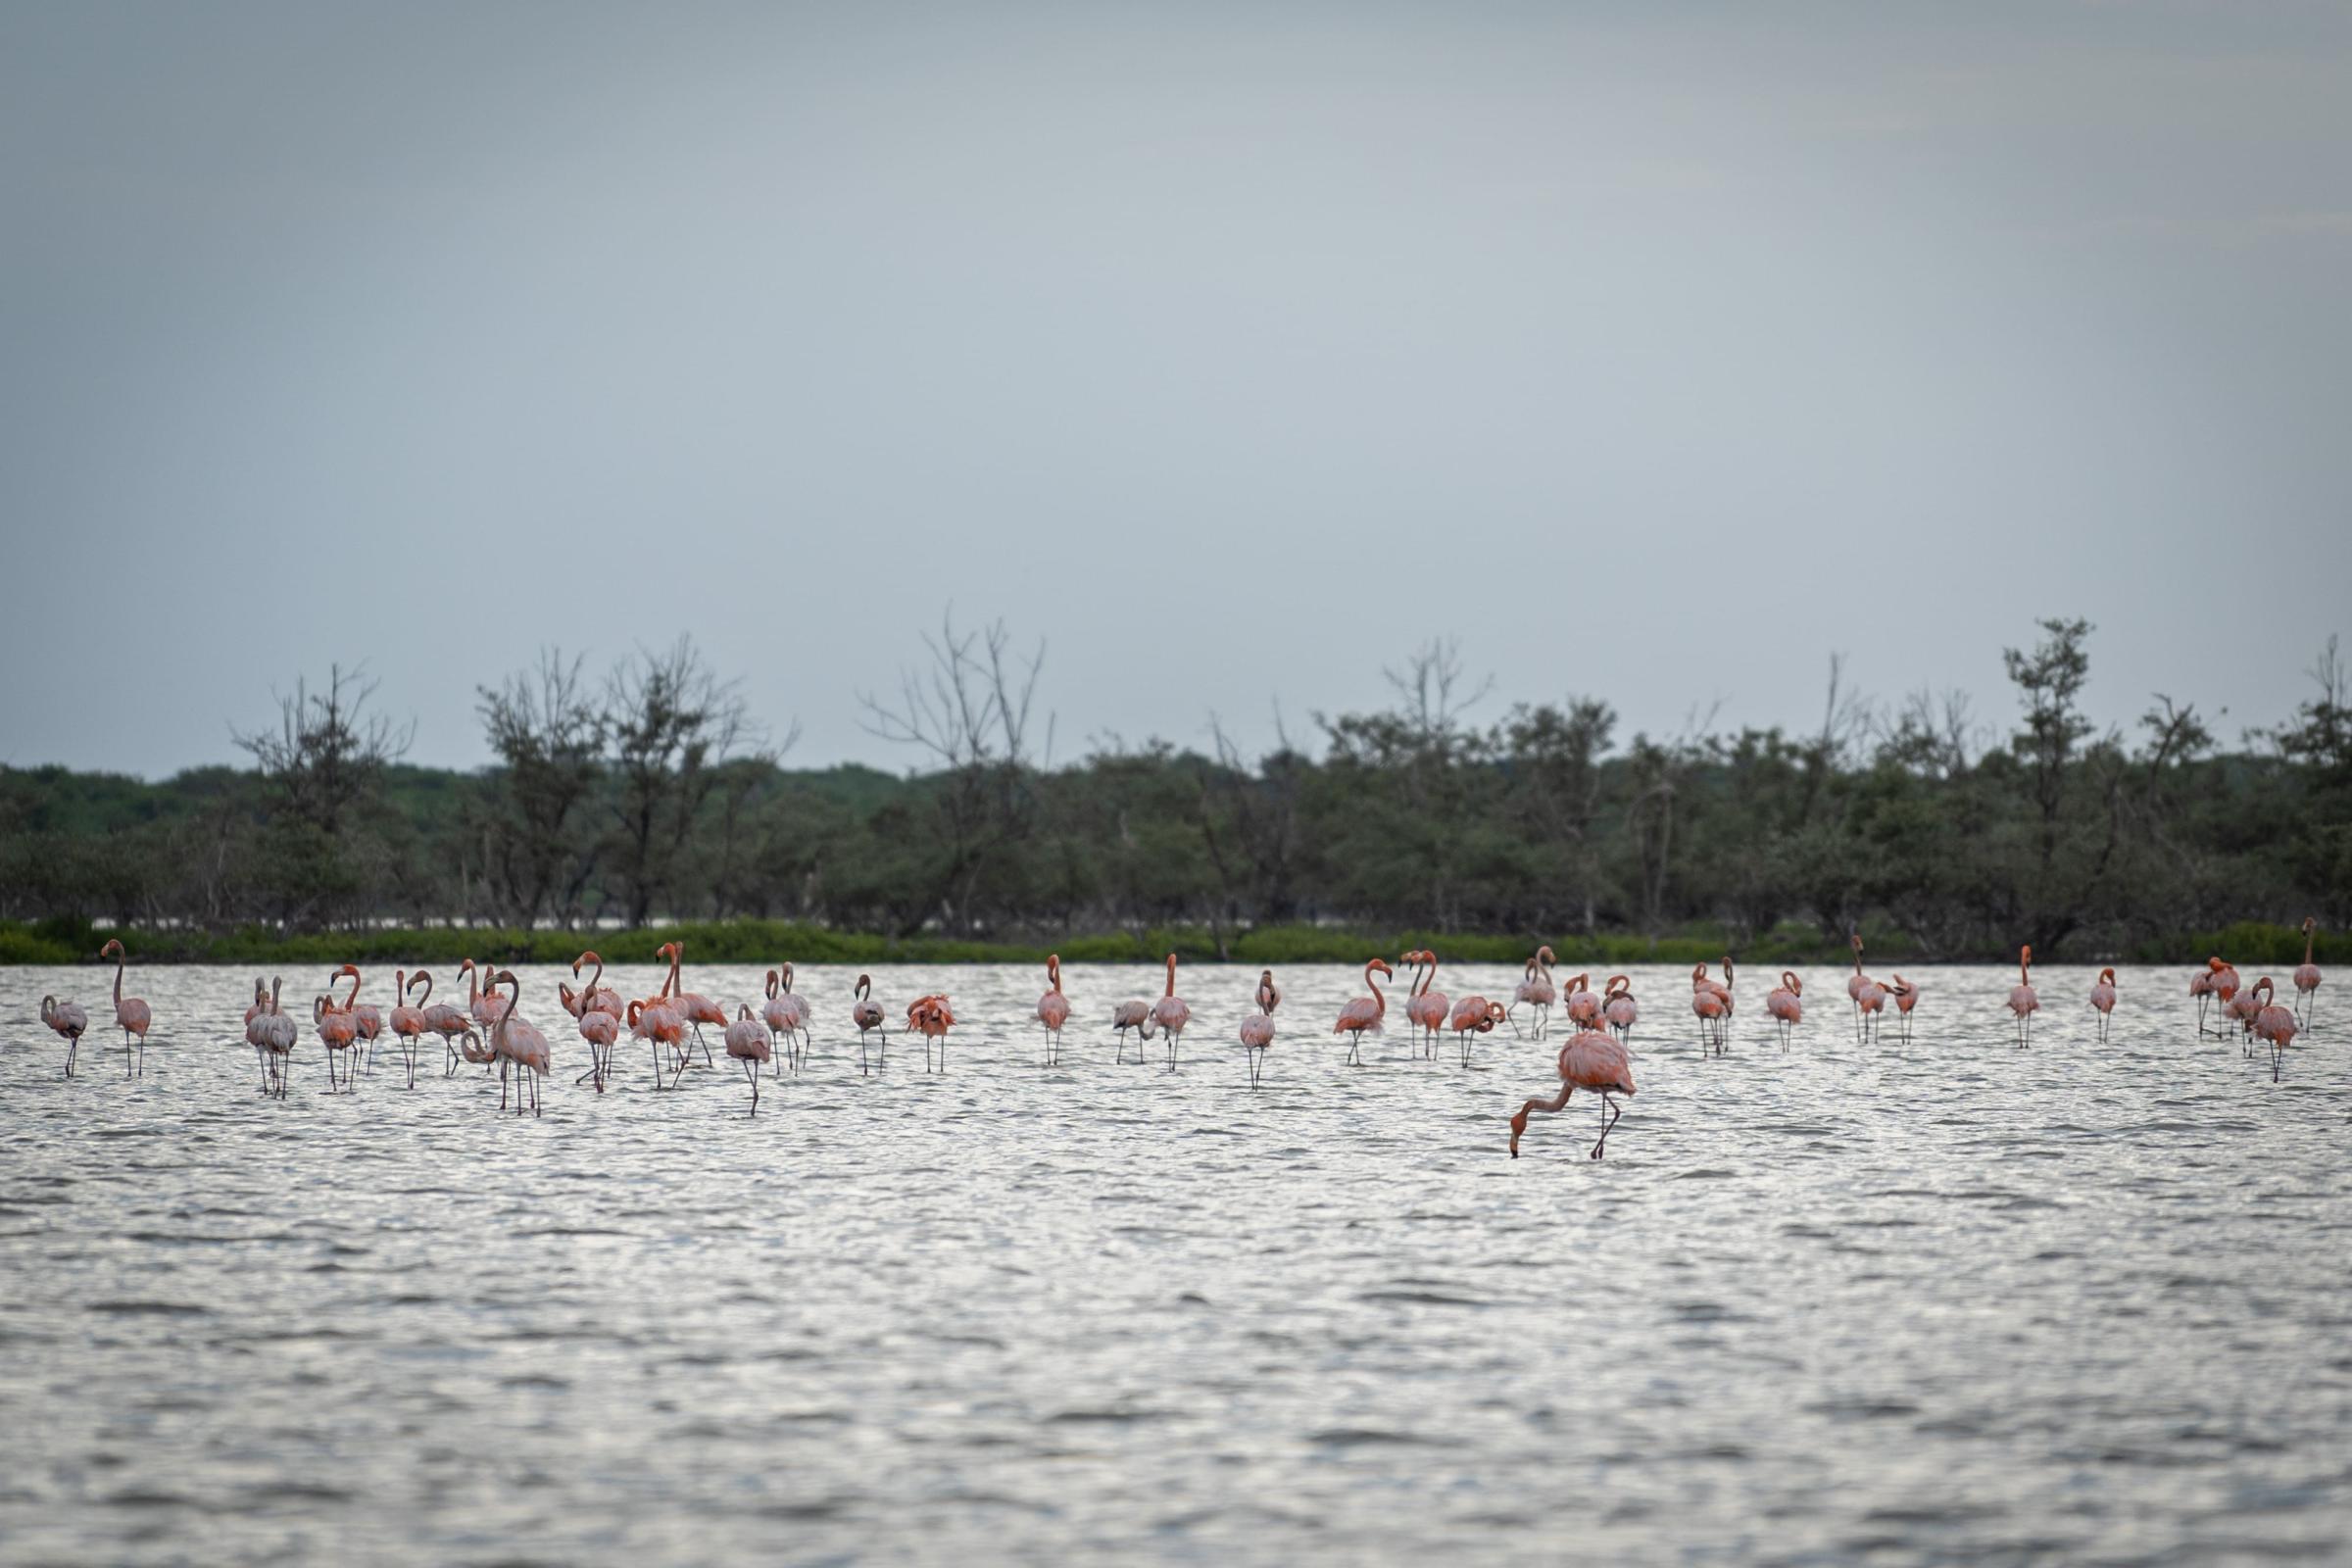 The Wayuu community defending flamingos